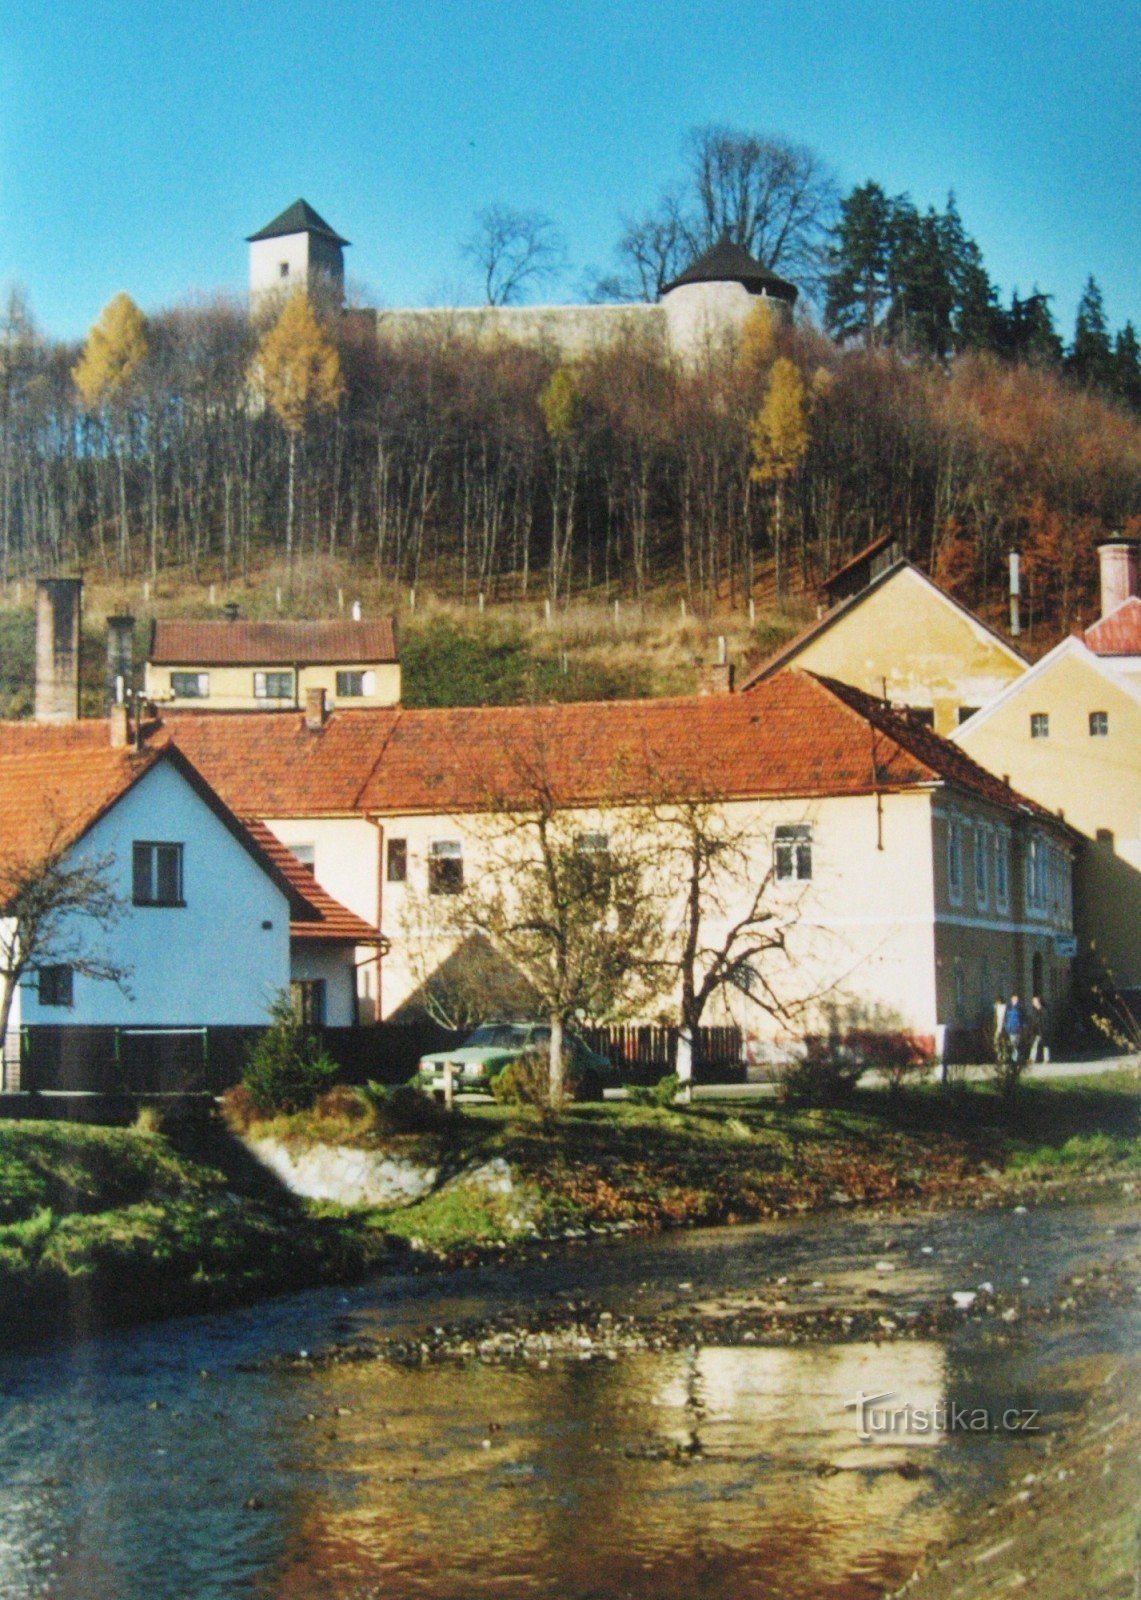 Zdjęcia z rodzinnego miasta - Bylnice - trasa Horní Lideč